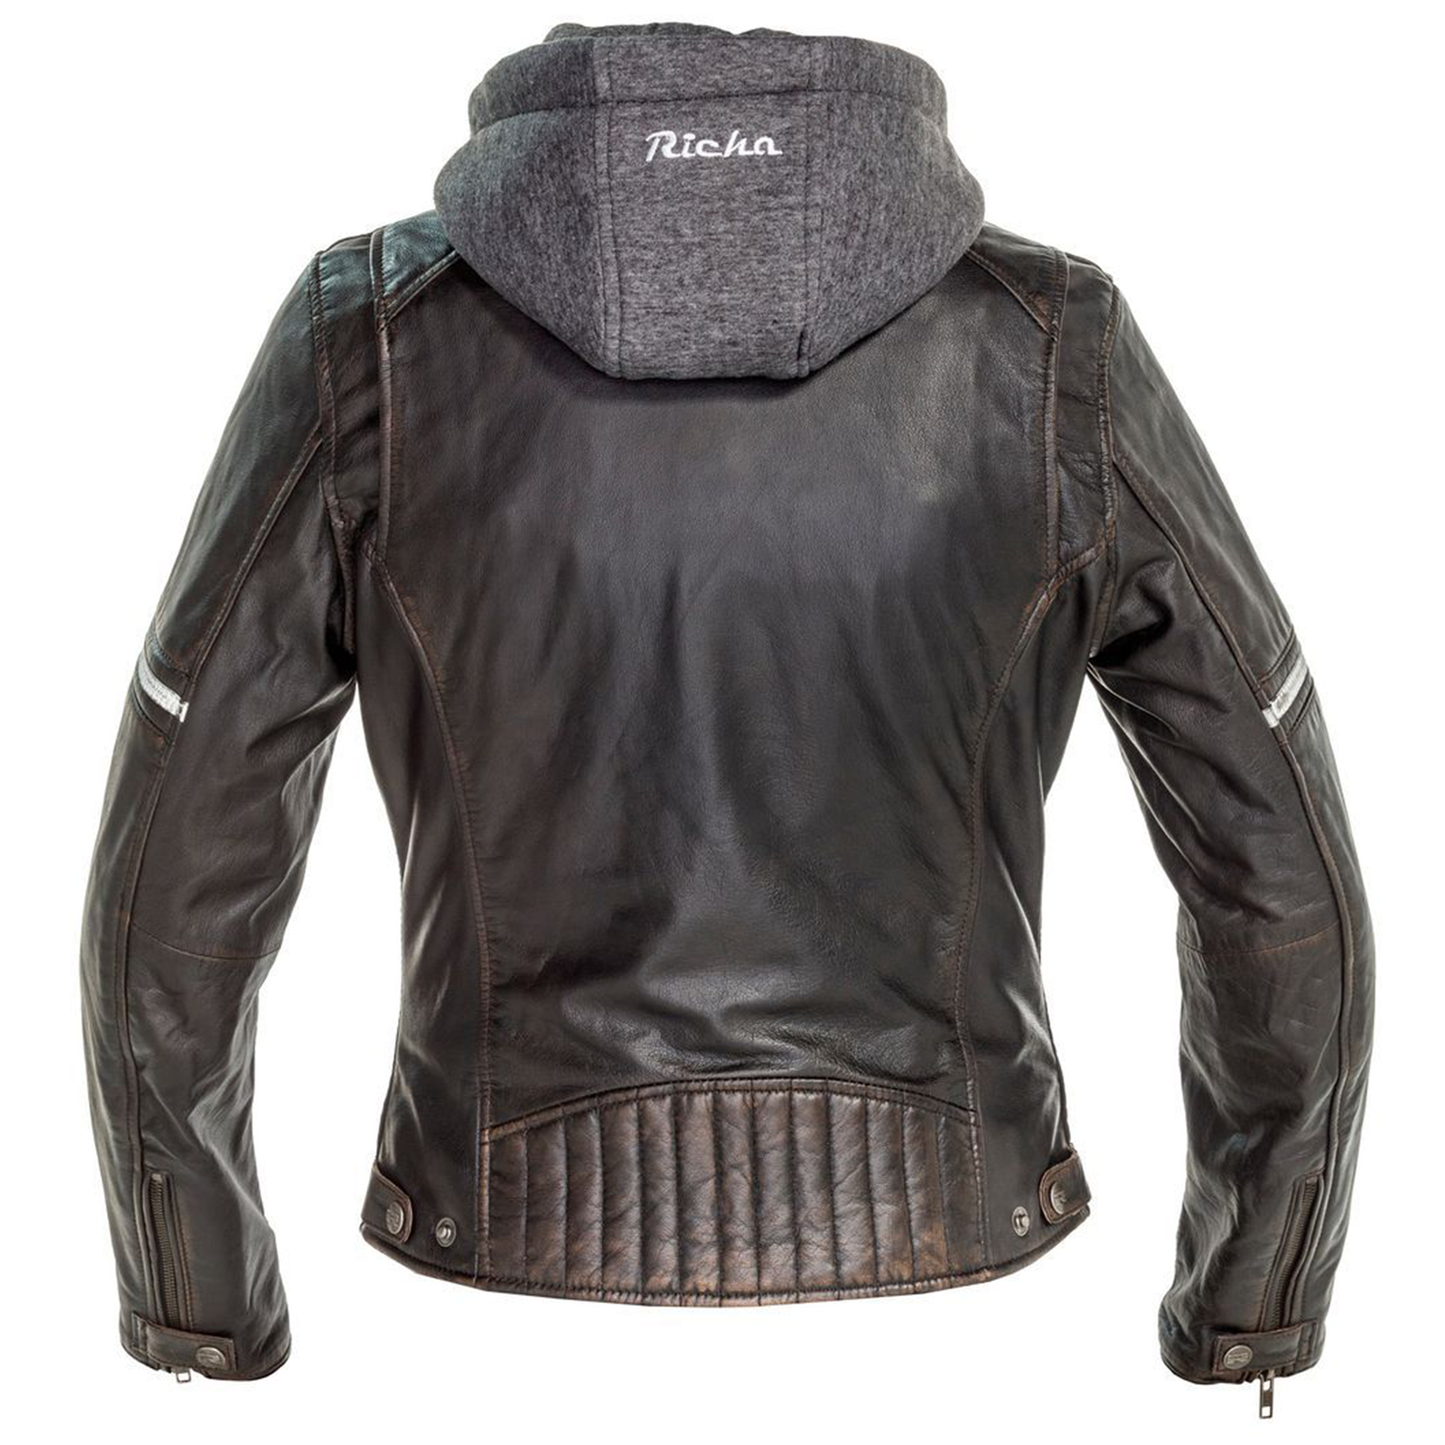 Richa Toulon 2 Ladies Leather Jacket - Anthracite/Brown